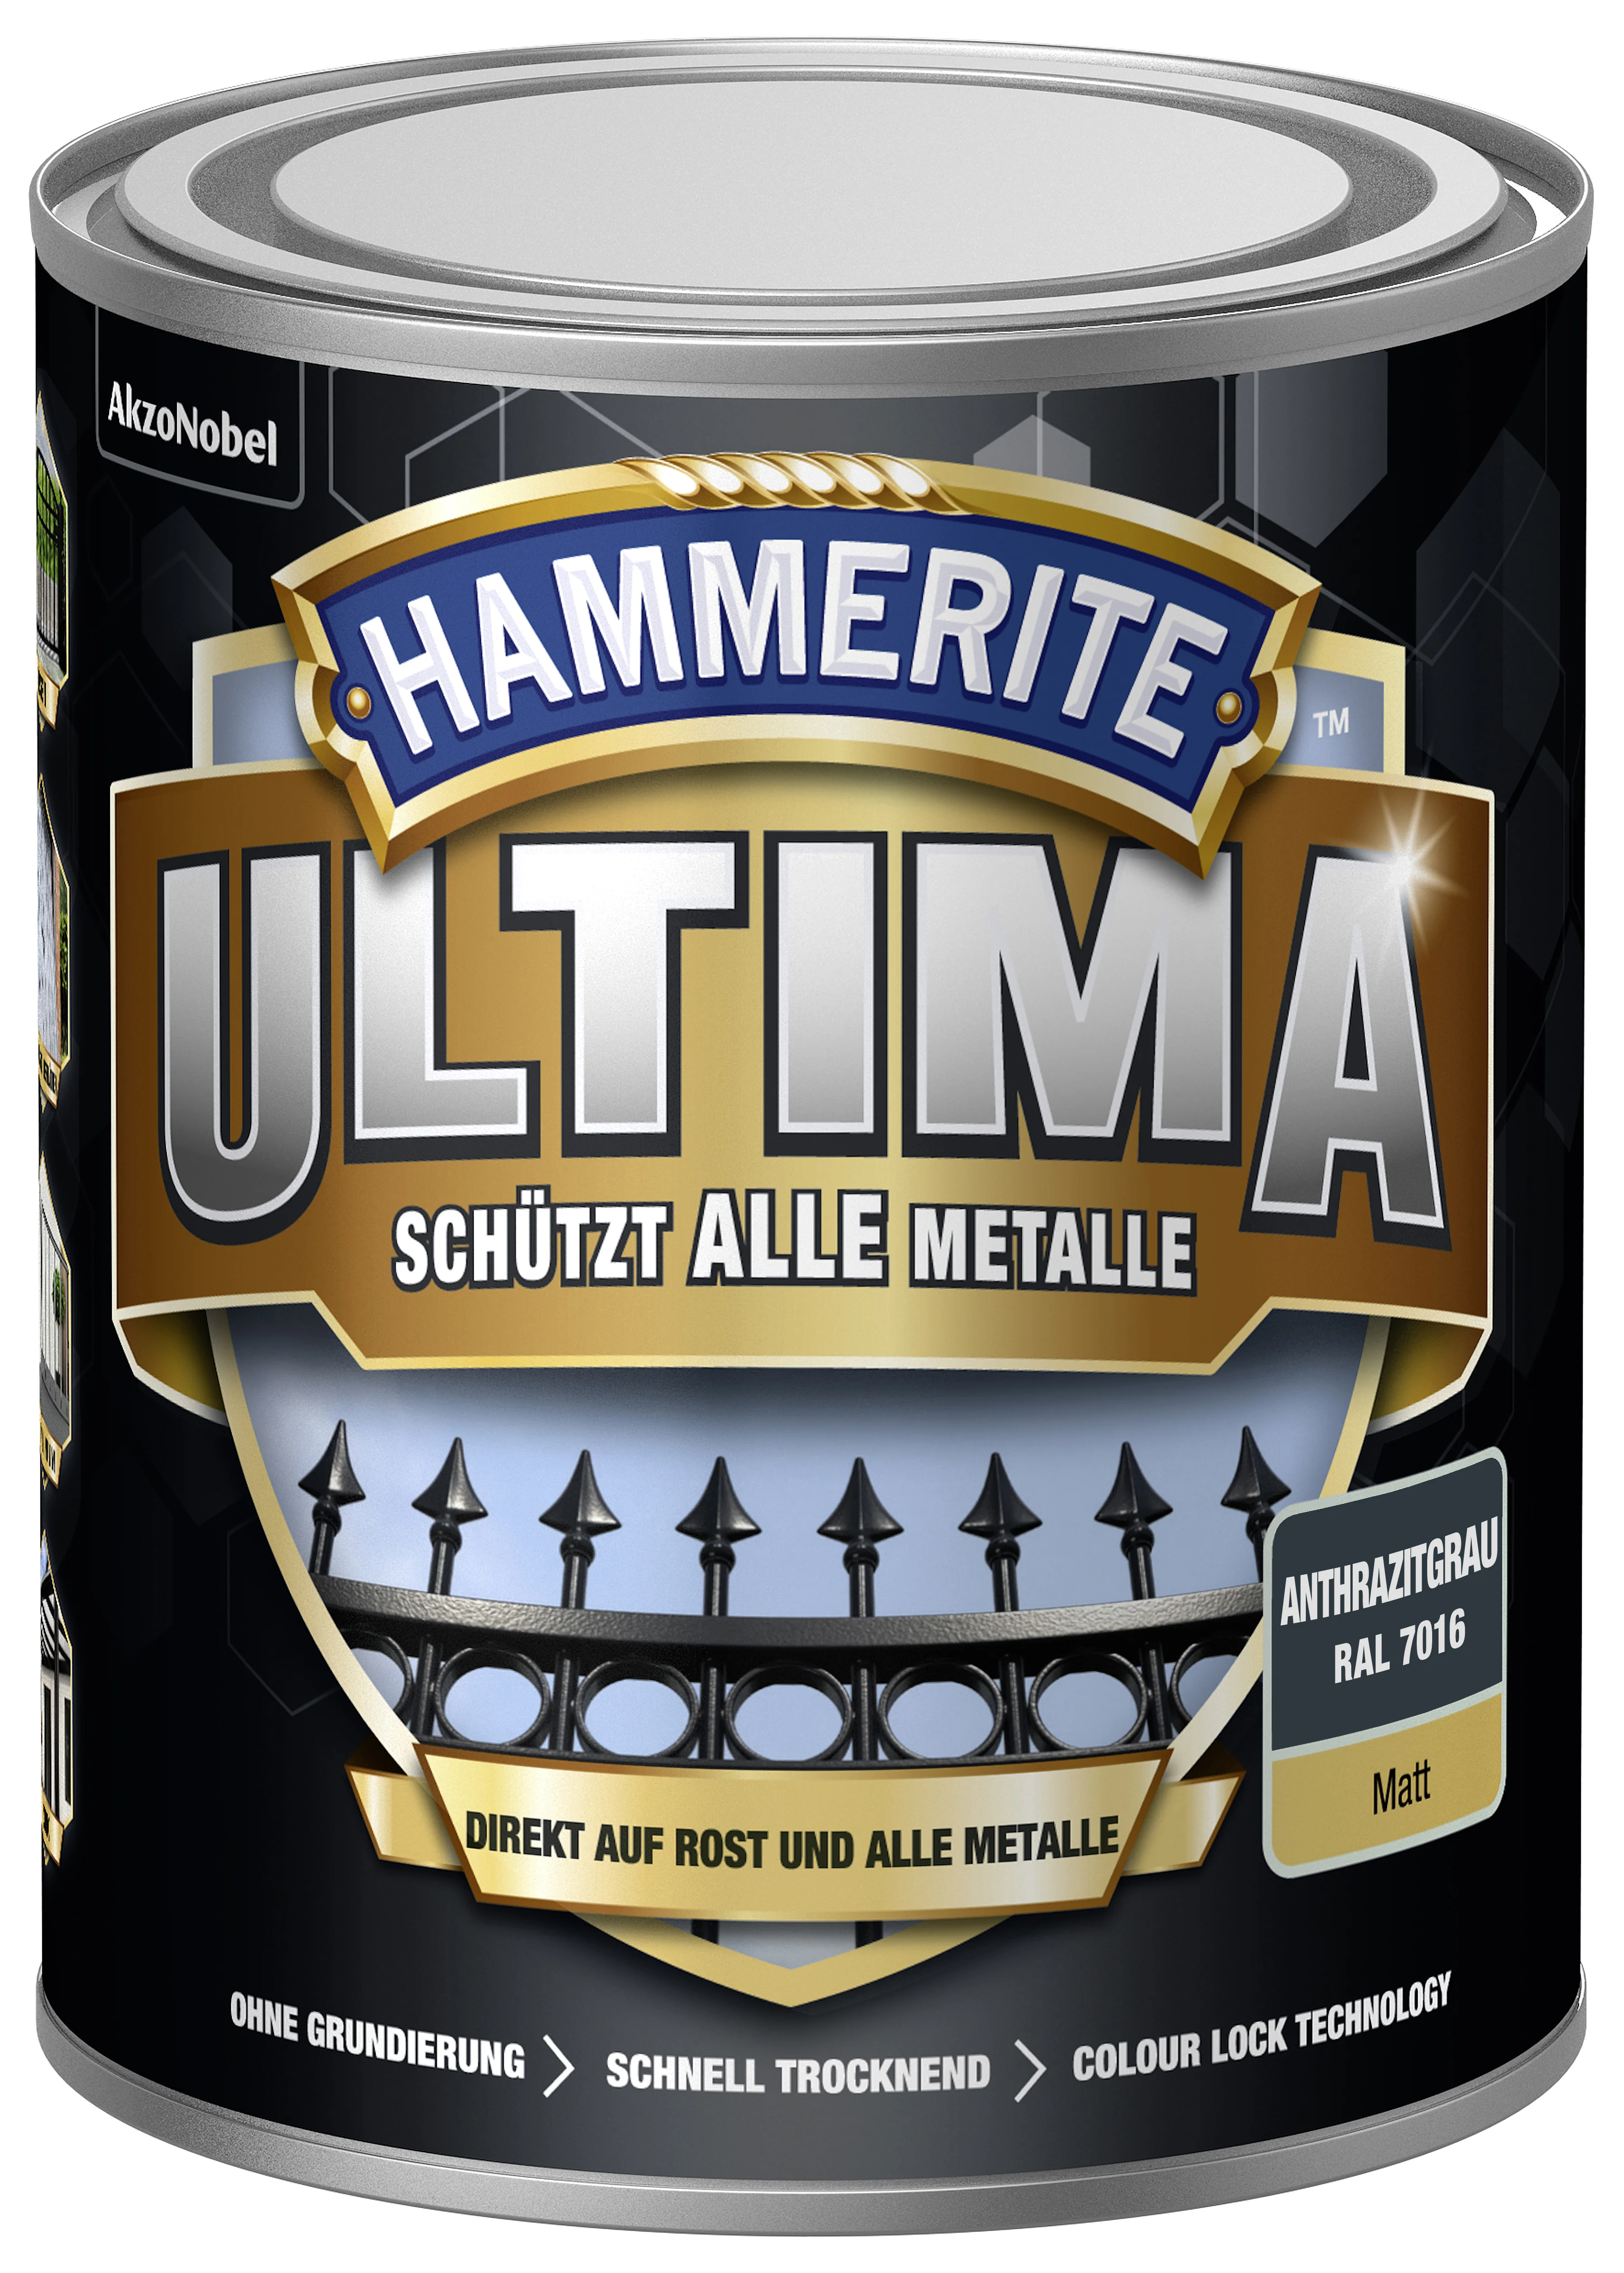 Hammerite Ultima Metallschutzlack Anthrazitgrau matt 750 ml